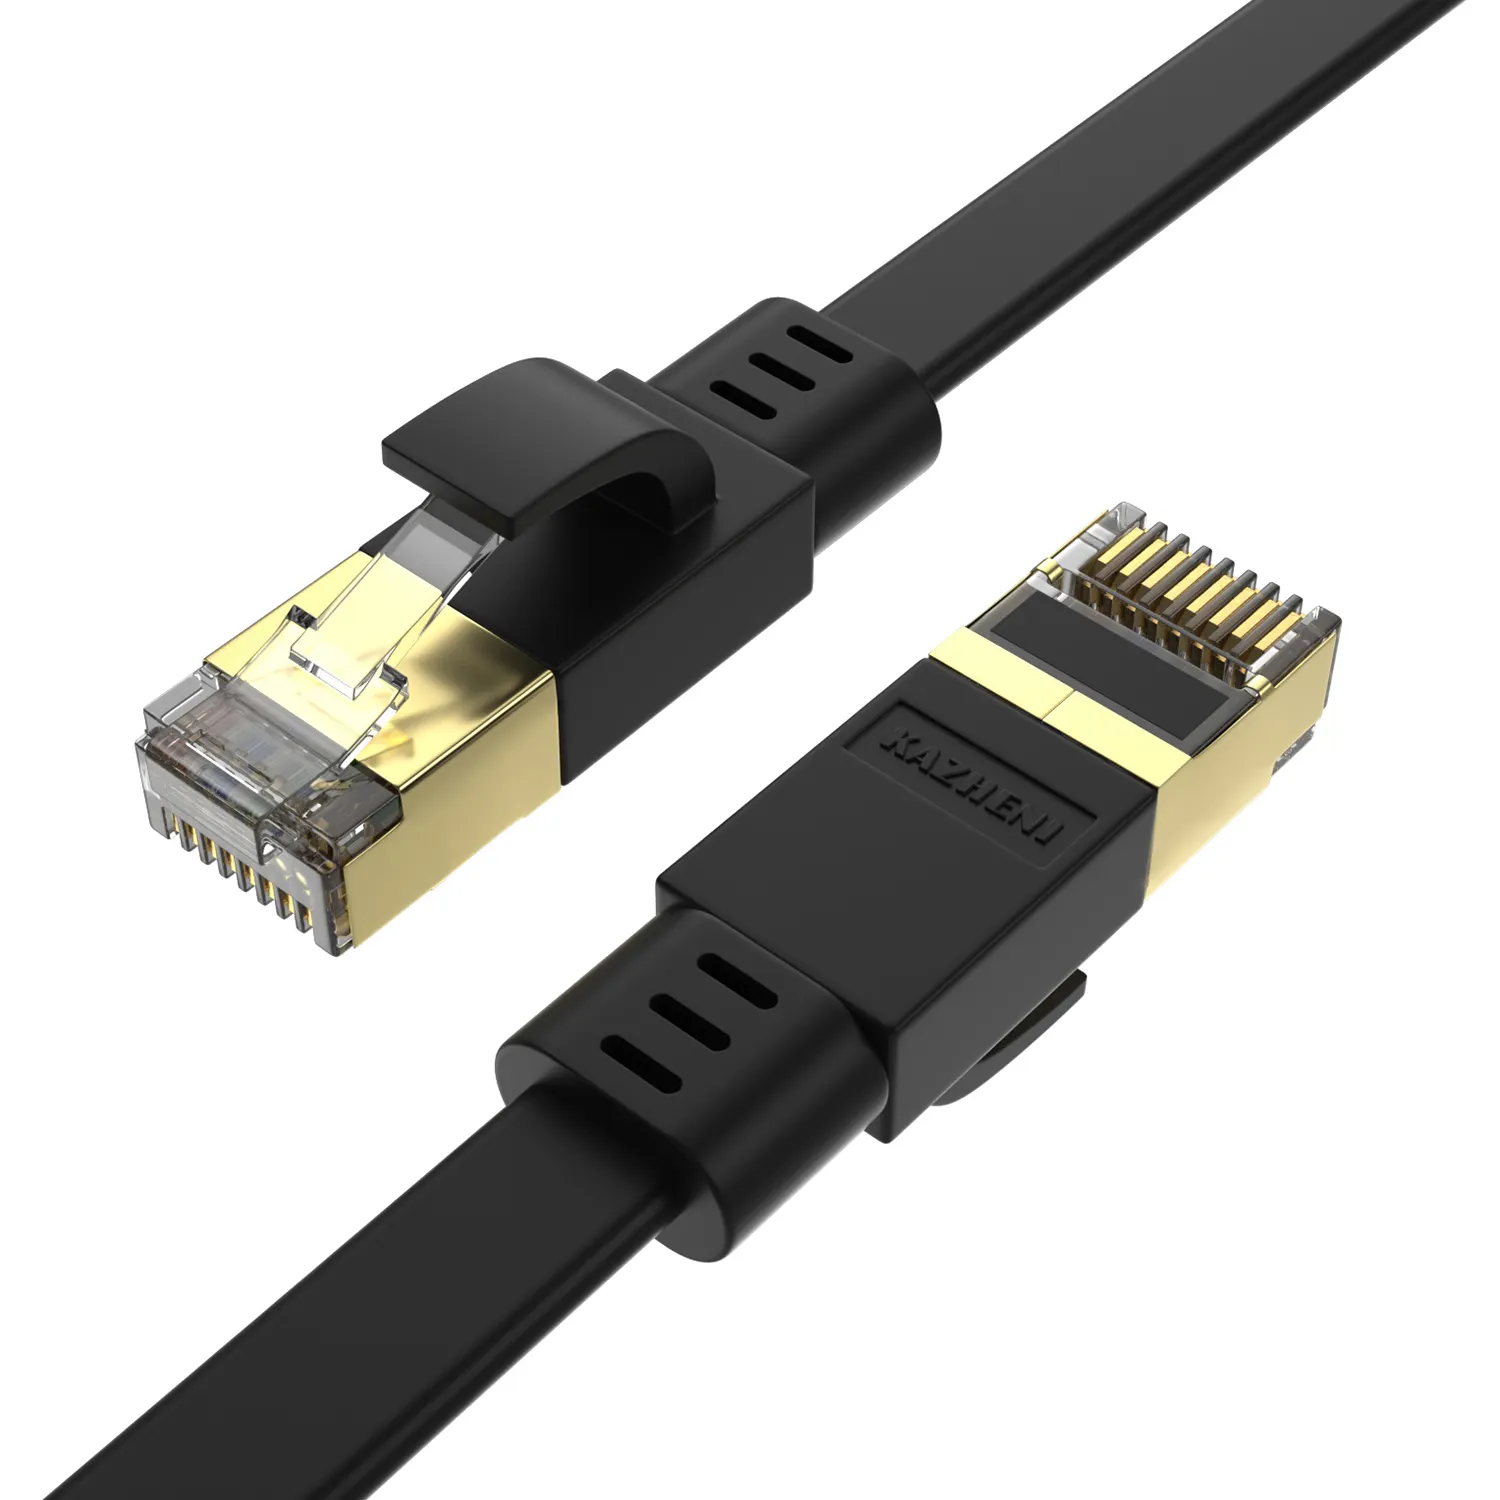 Enchufe profesional chapado en oro de alta velocidad, Cable Lan Ethernet CAT 8 RJ45